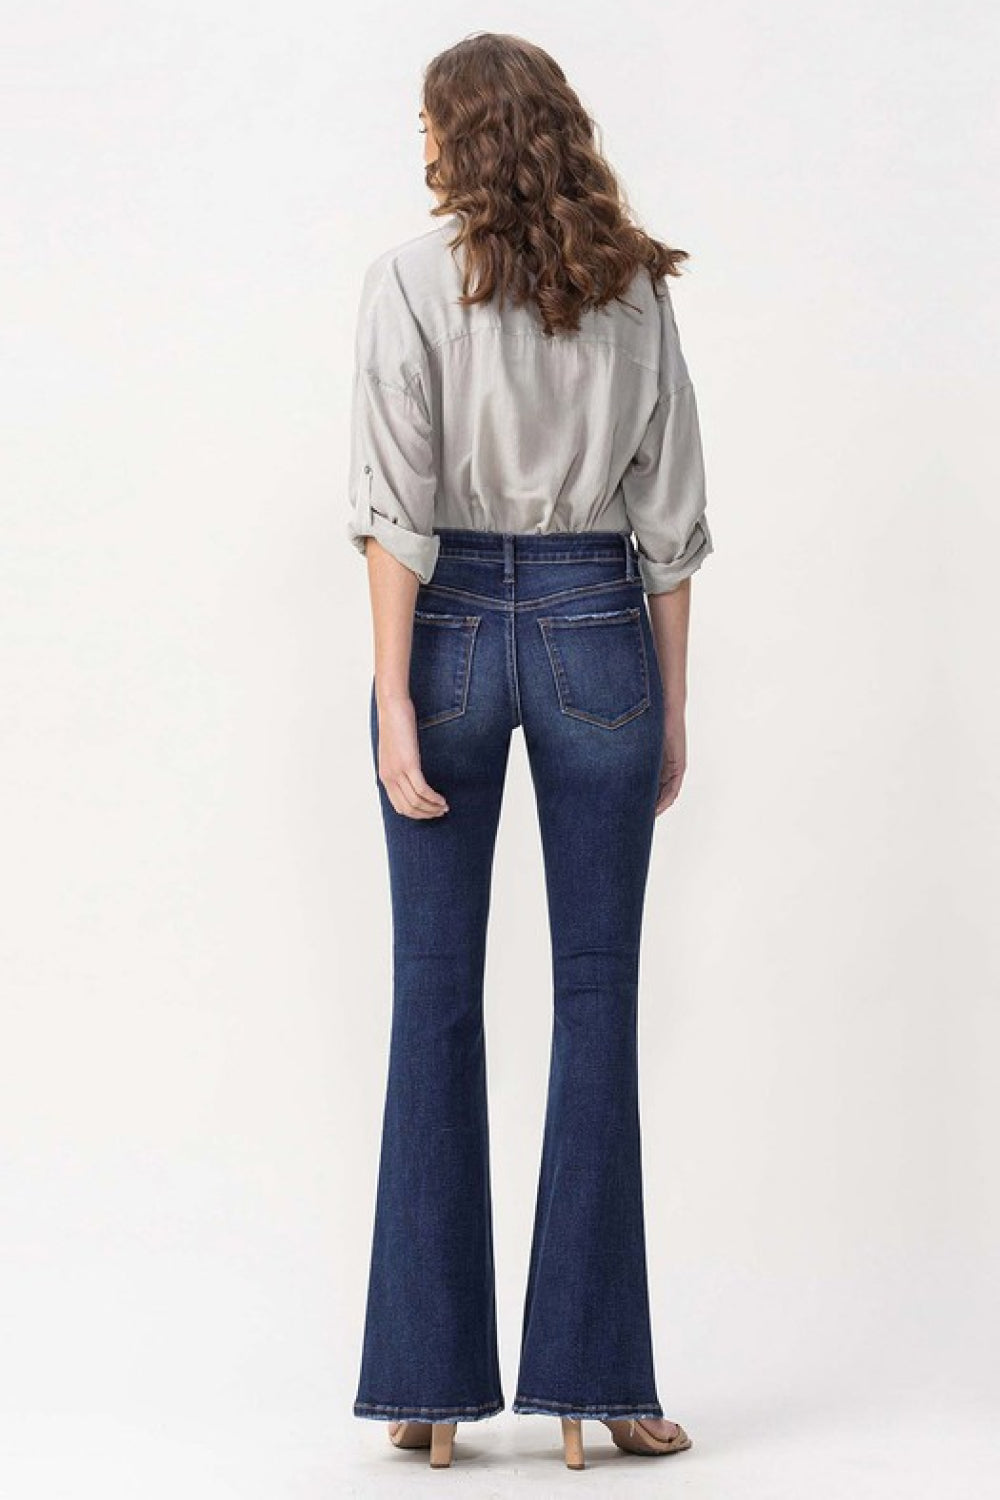 Lovervet Joanna Midrise Flare Jeans